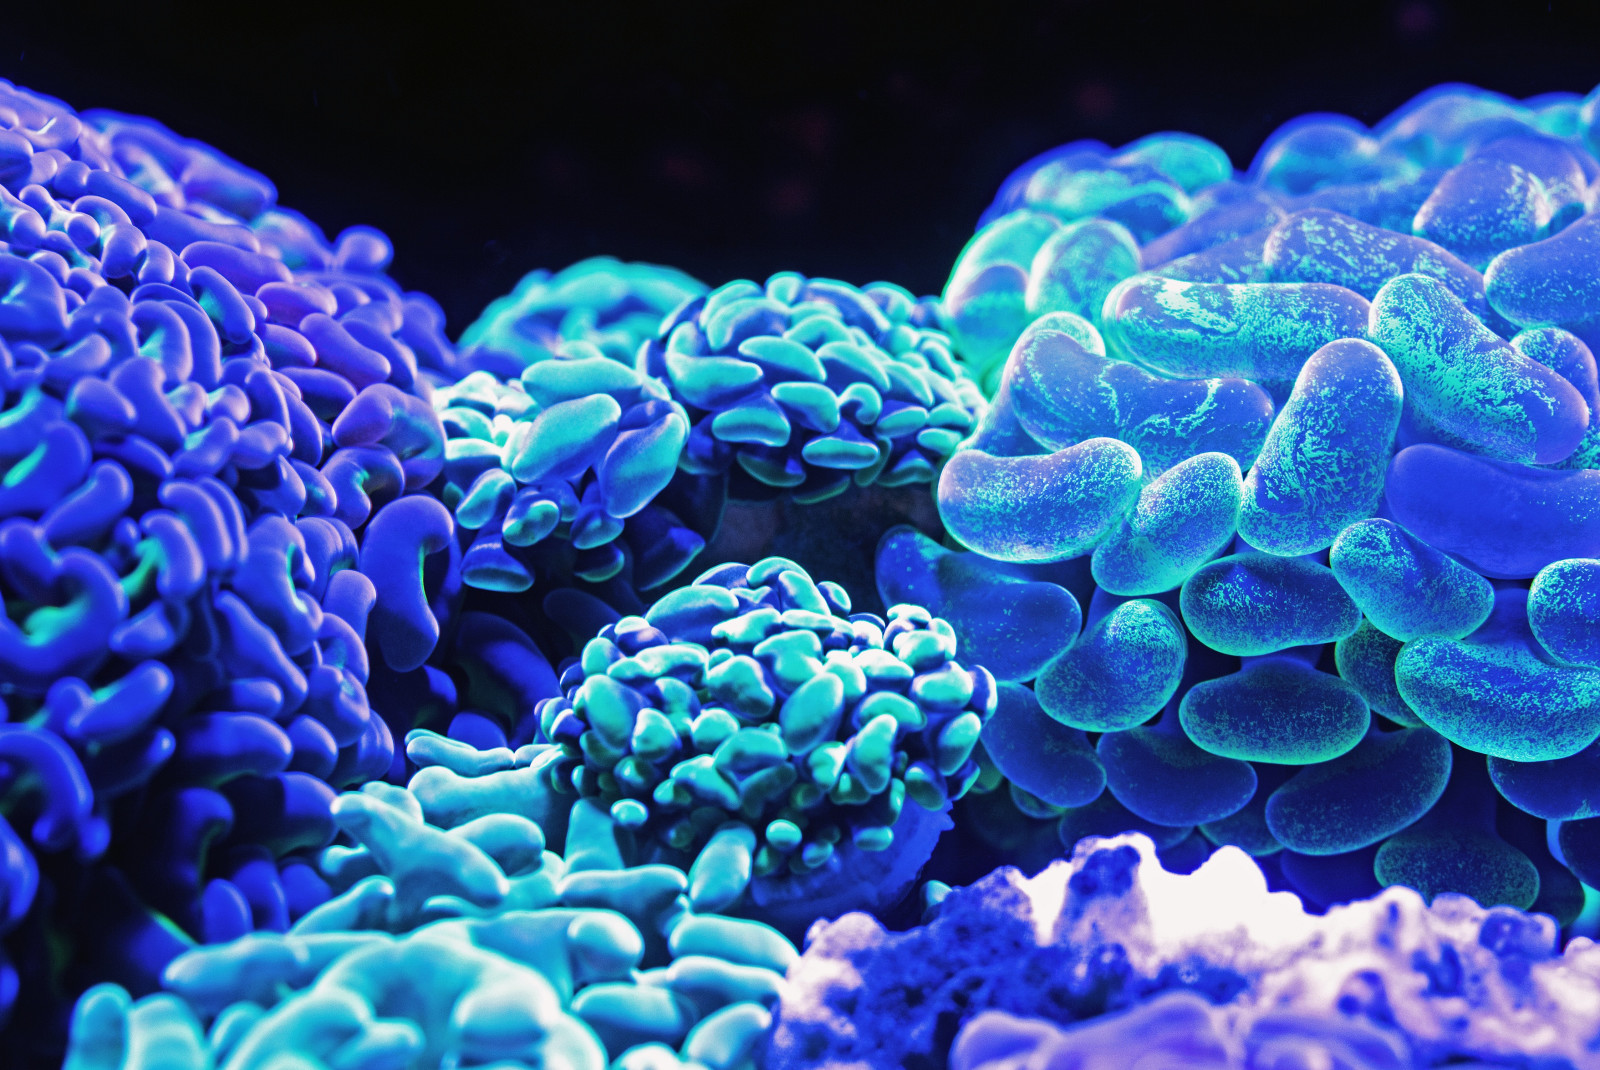 Bioluminescent coral reefs